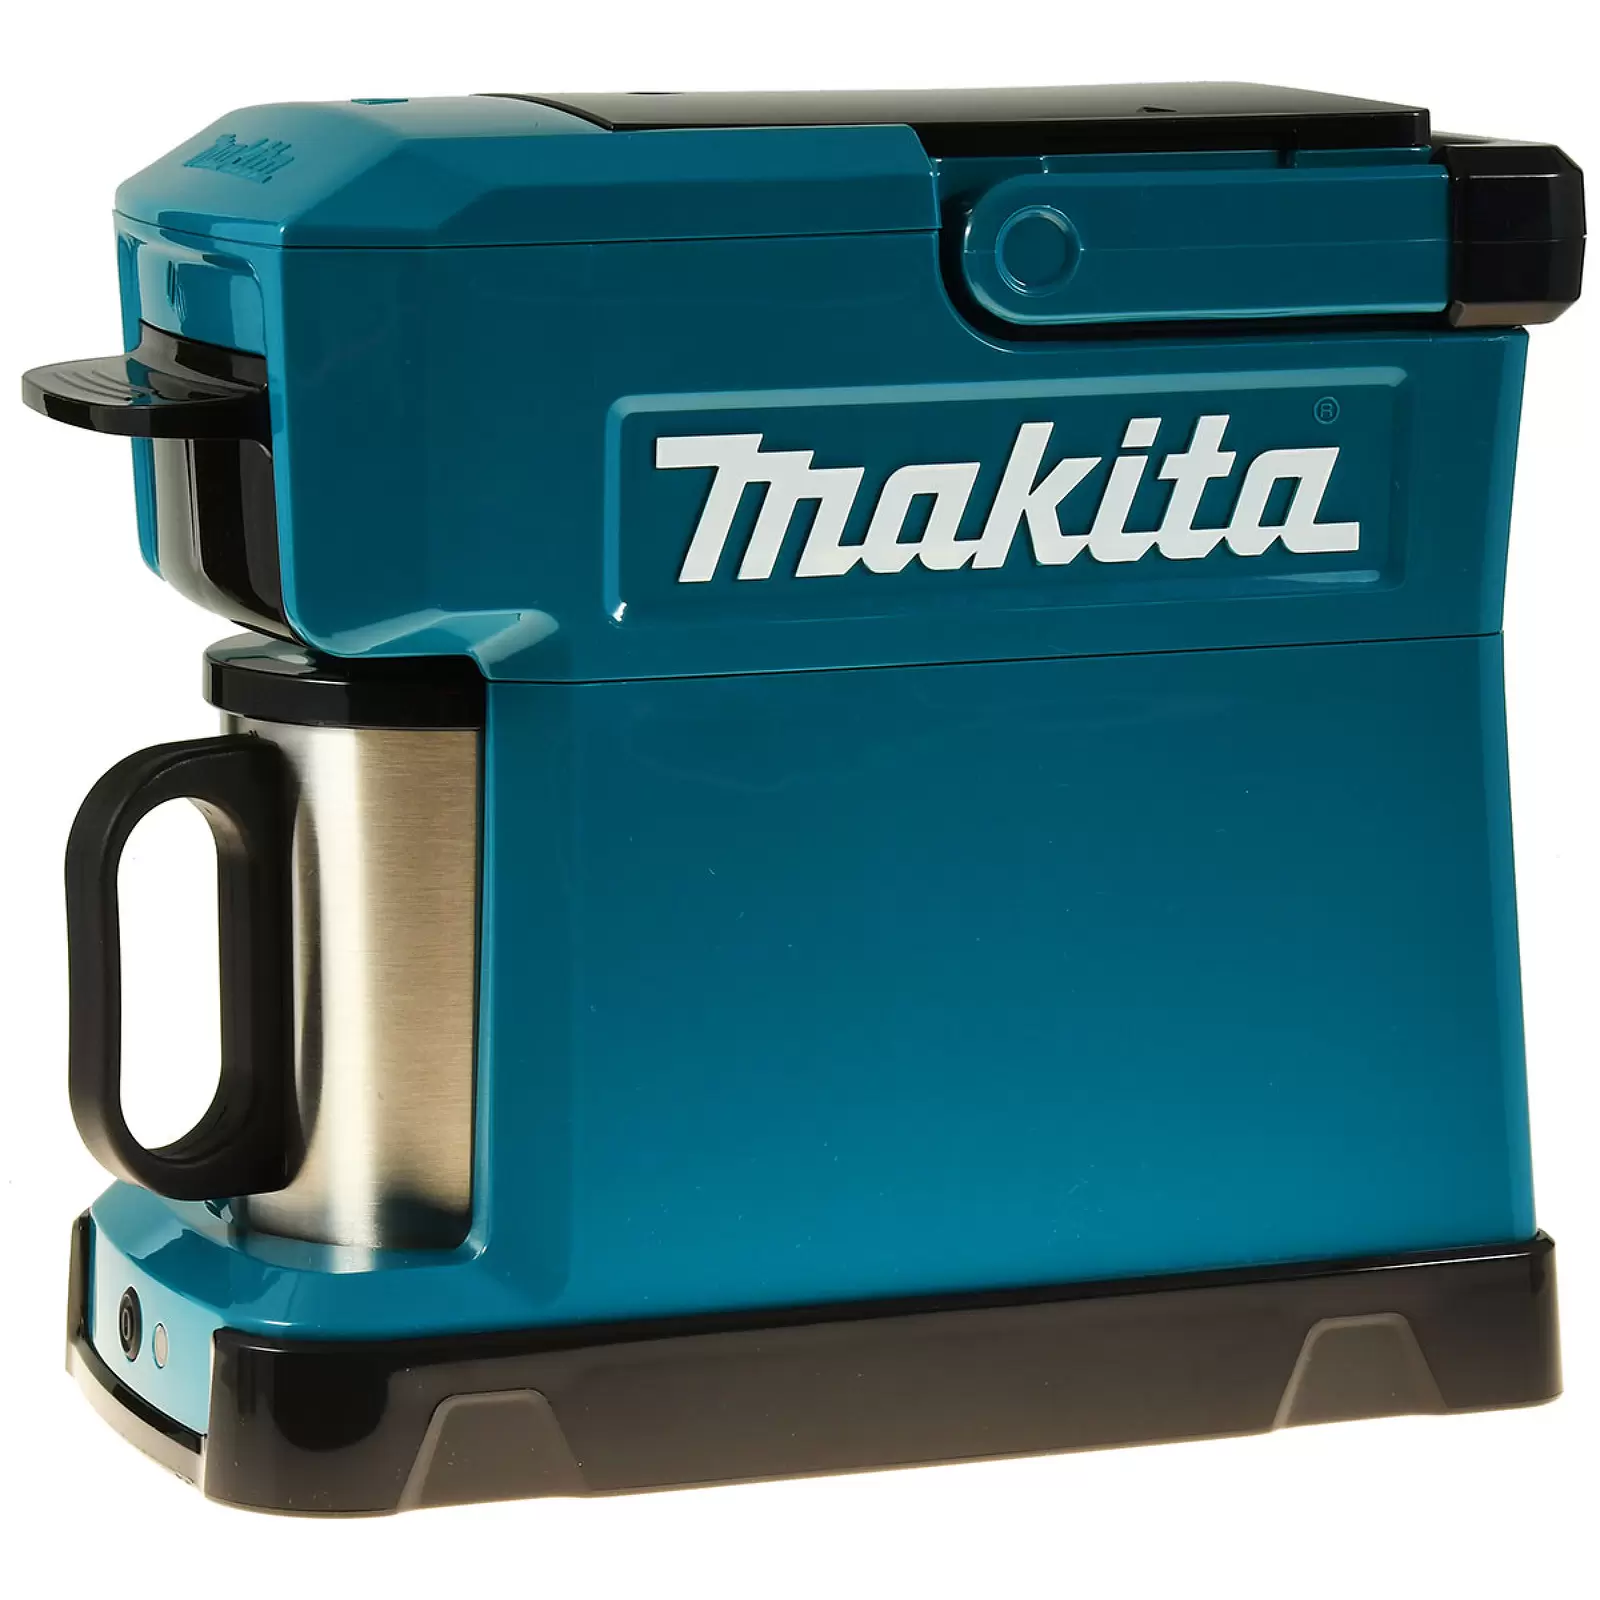 Original Makita Akku-Kaffeemaschine DCM501Z 18V (ohne Akku, ohne Ladegerät)